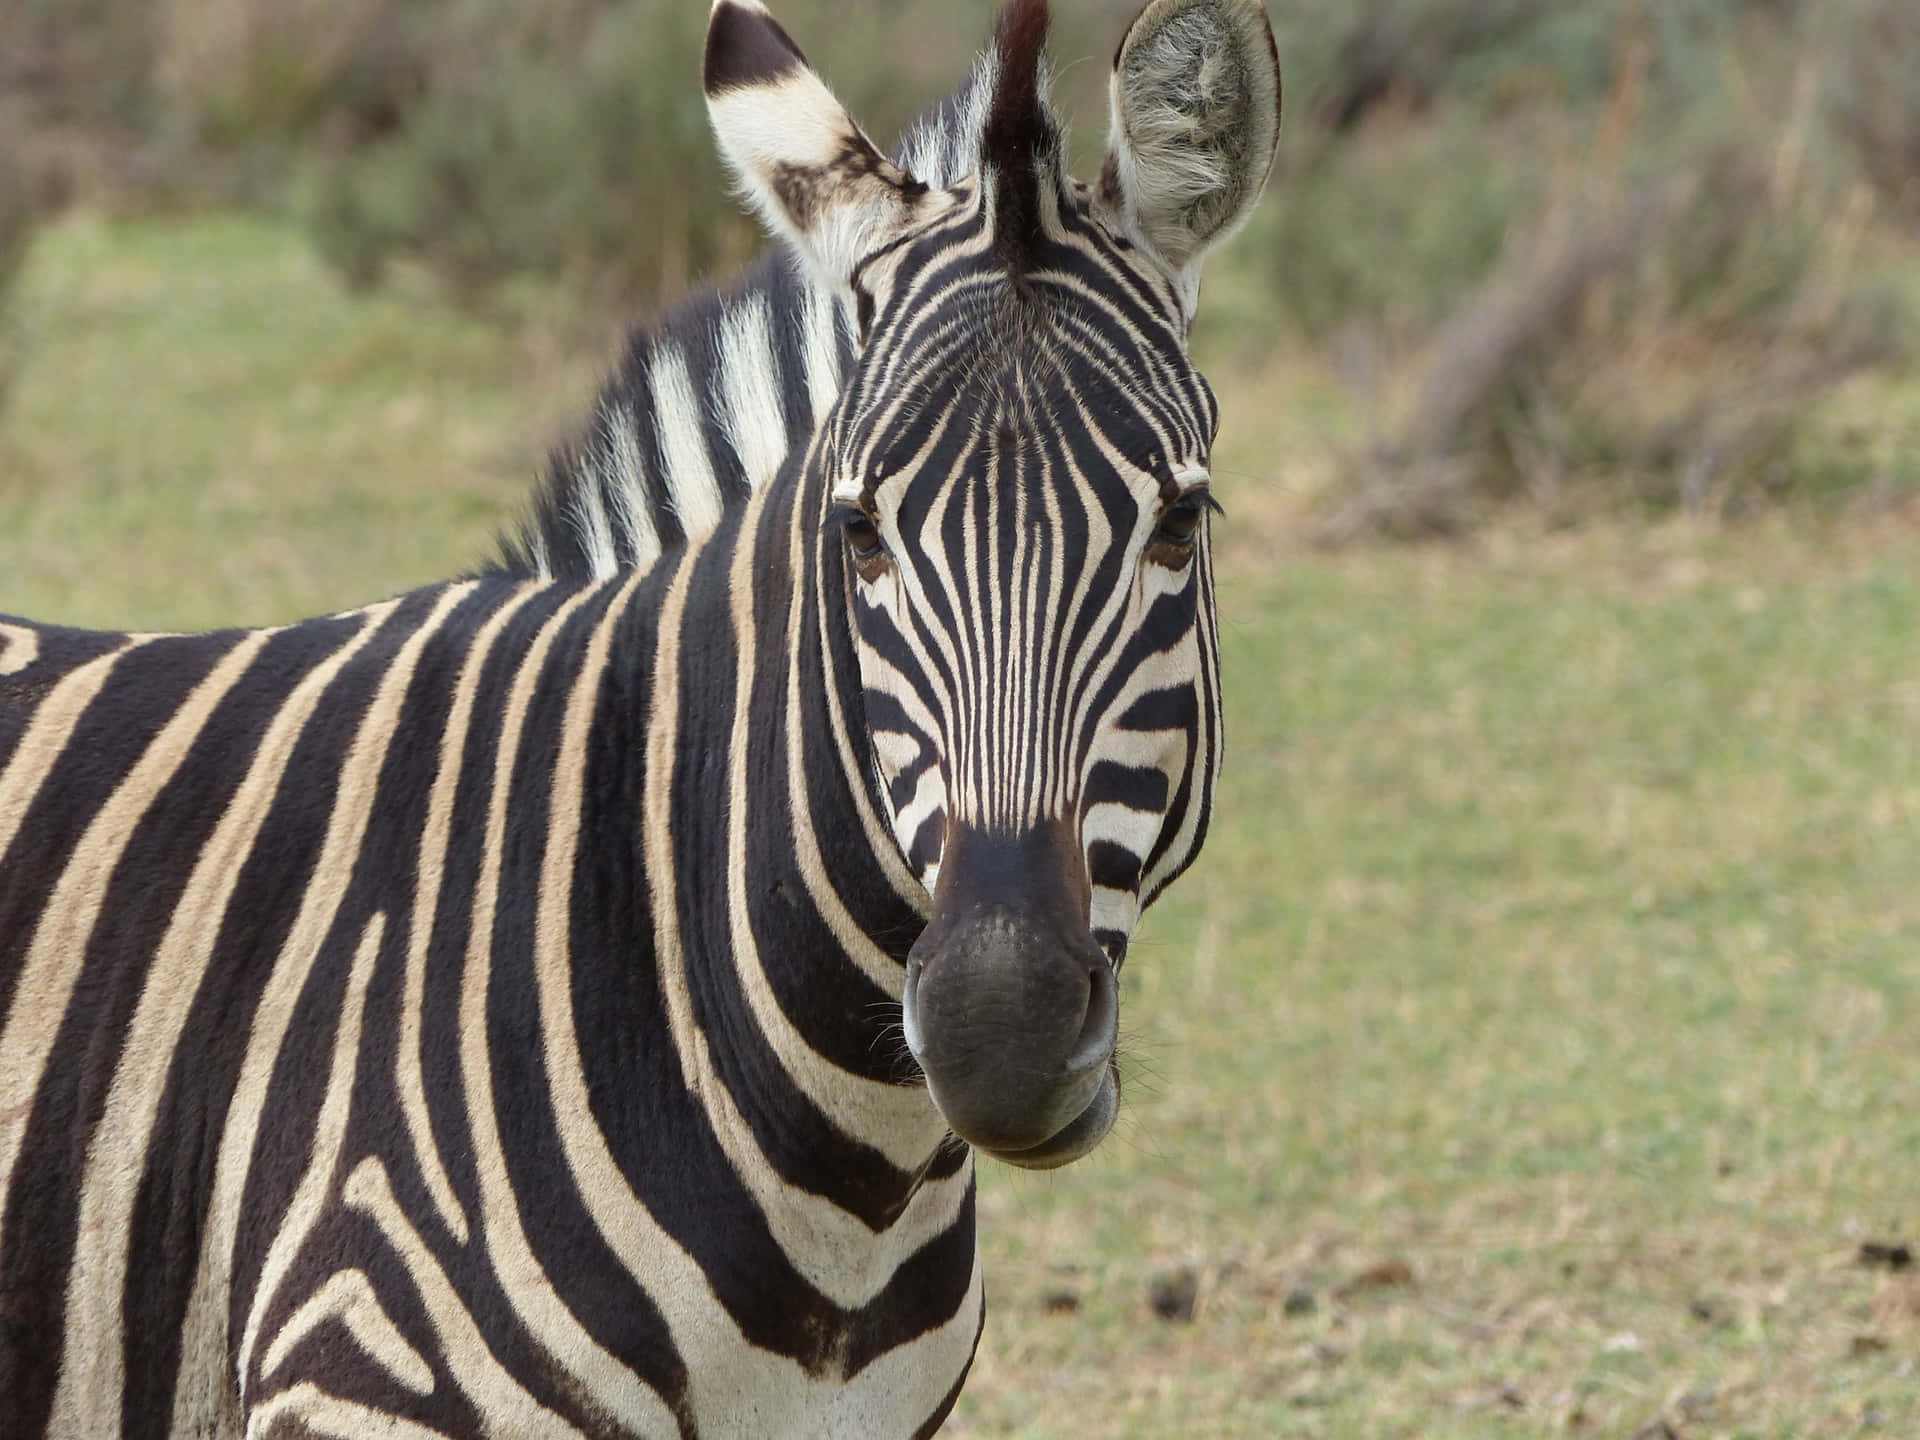 Close up of a Zebra